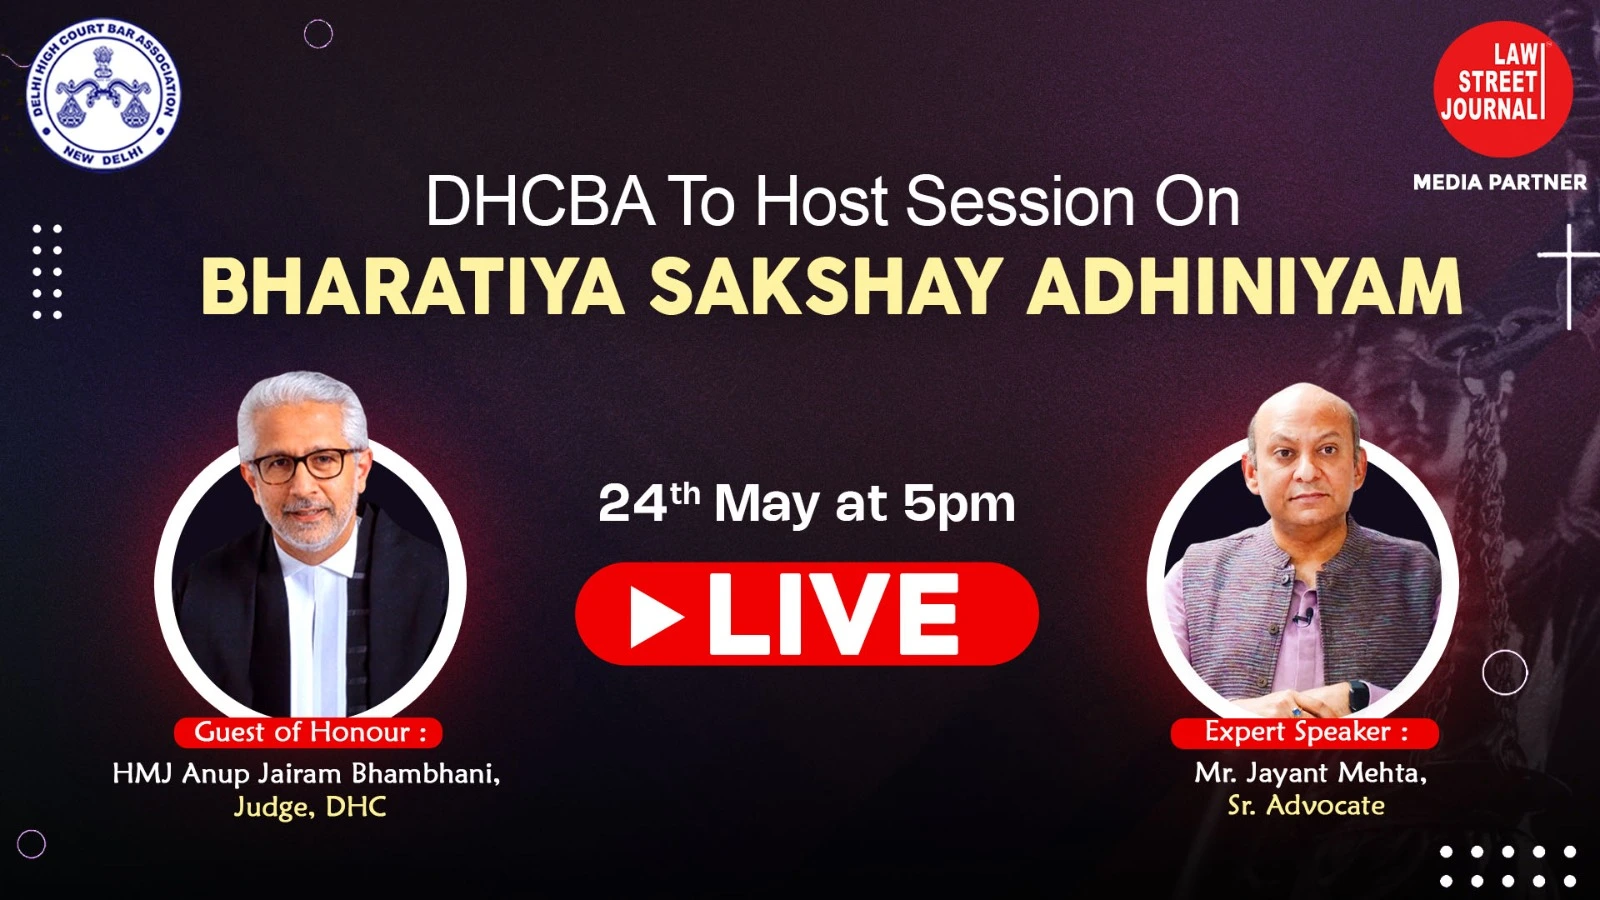 LIVE Coverage In Depth Exploration of Bhartiya Sakshya Adhiniyam (BSA) at DHCBA Lecture Series